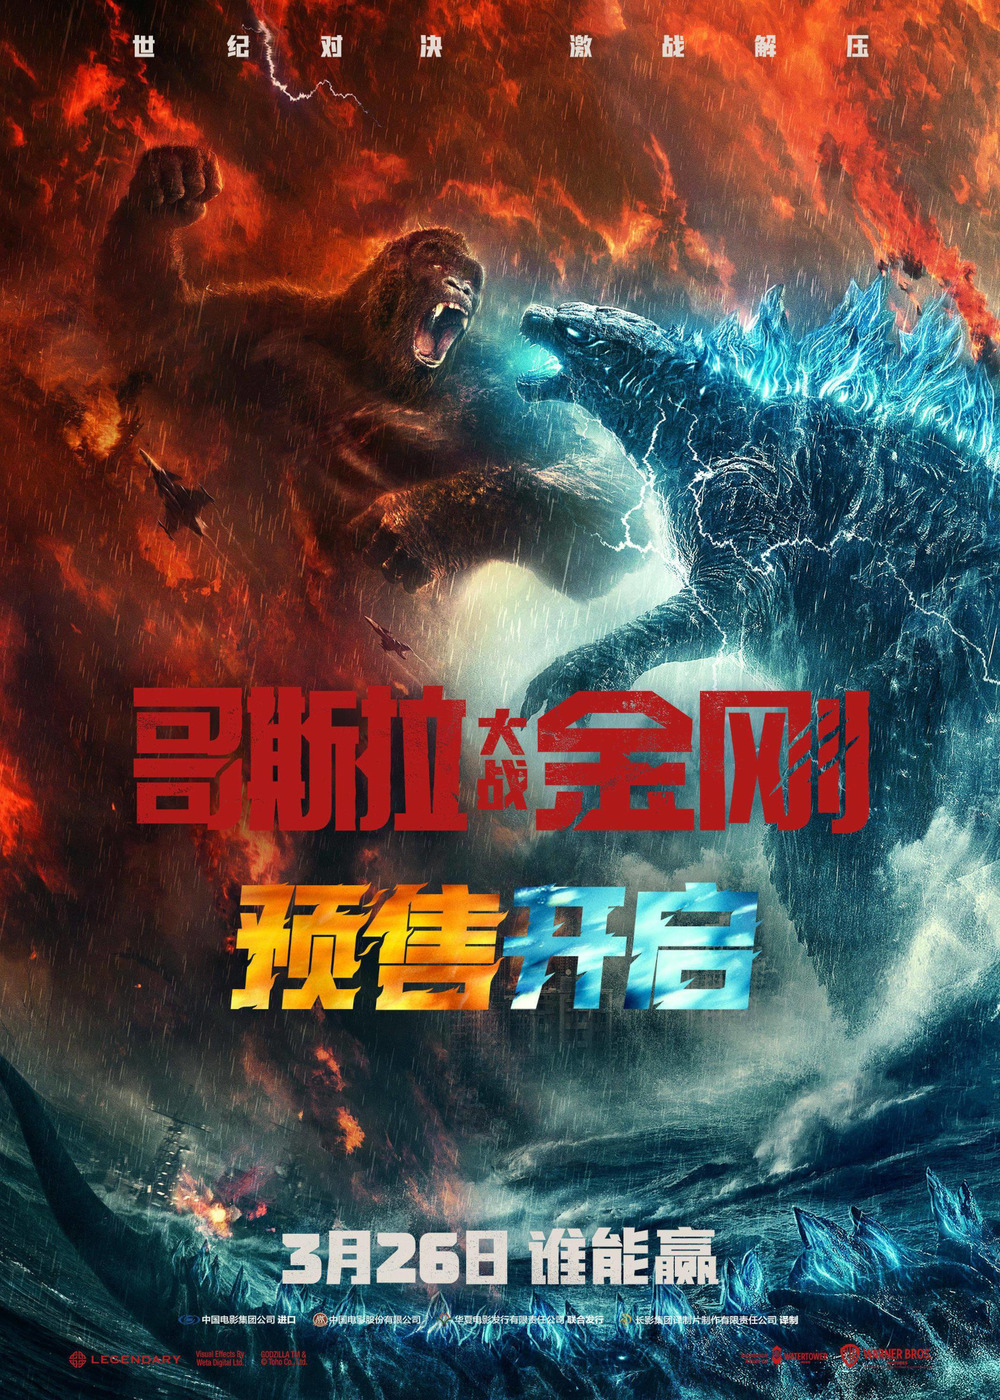 Godzilla Vs Kong 21 Dvd Release Date Warum Wir Godzilla Vs Kong Evangelion Zu Verdanken Haben Dvd Forum At Skull Island And King Of The Monsters Nganuwingko